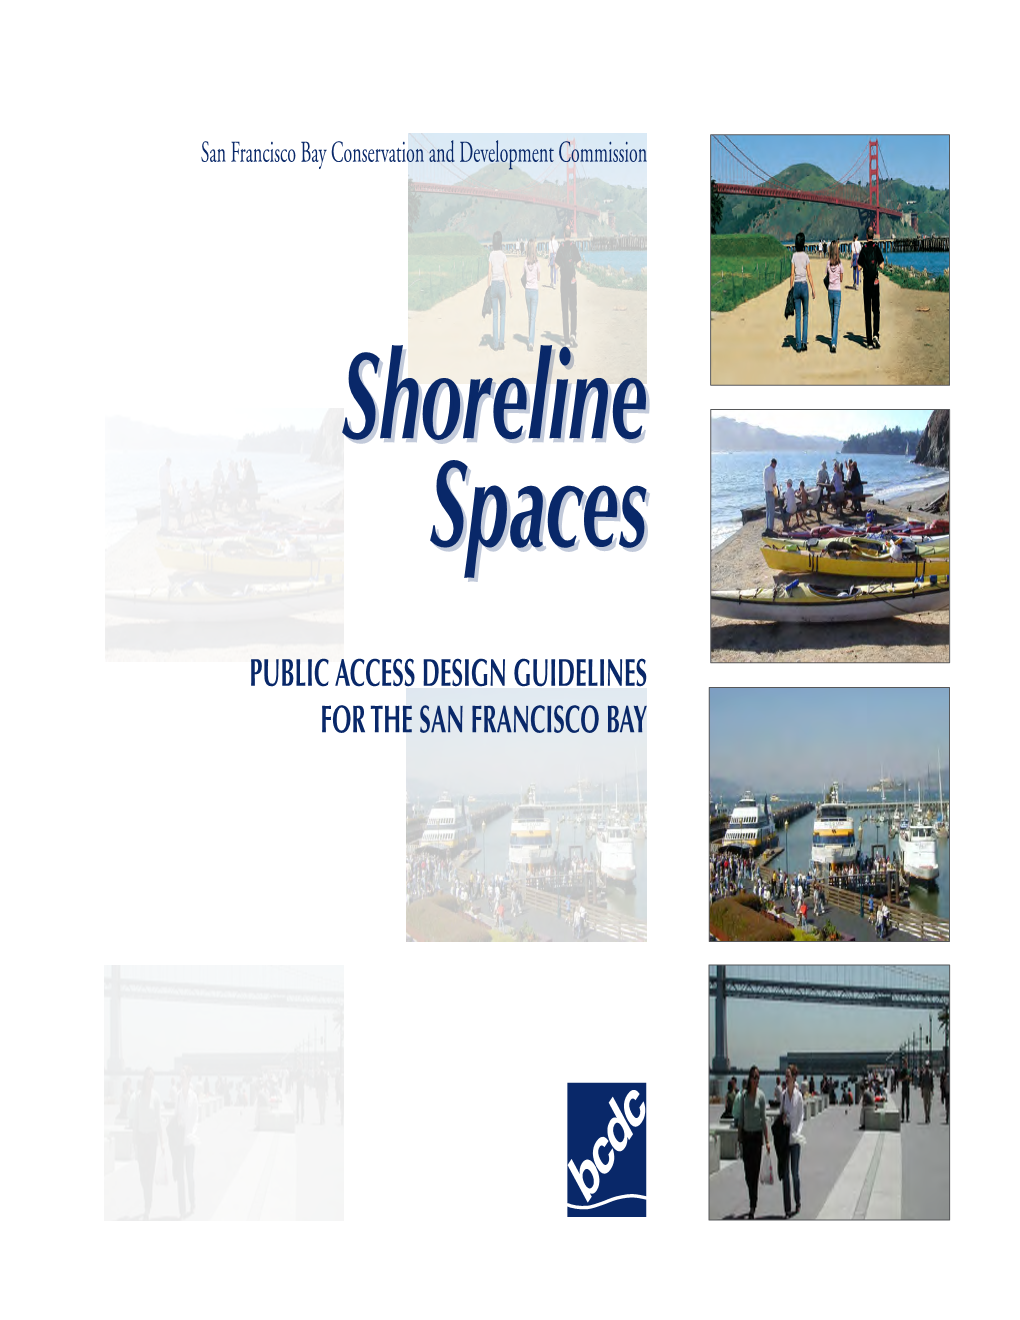 Shoreline Spaces Public Access Design Guidelines for the San Francisco